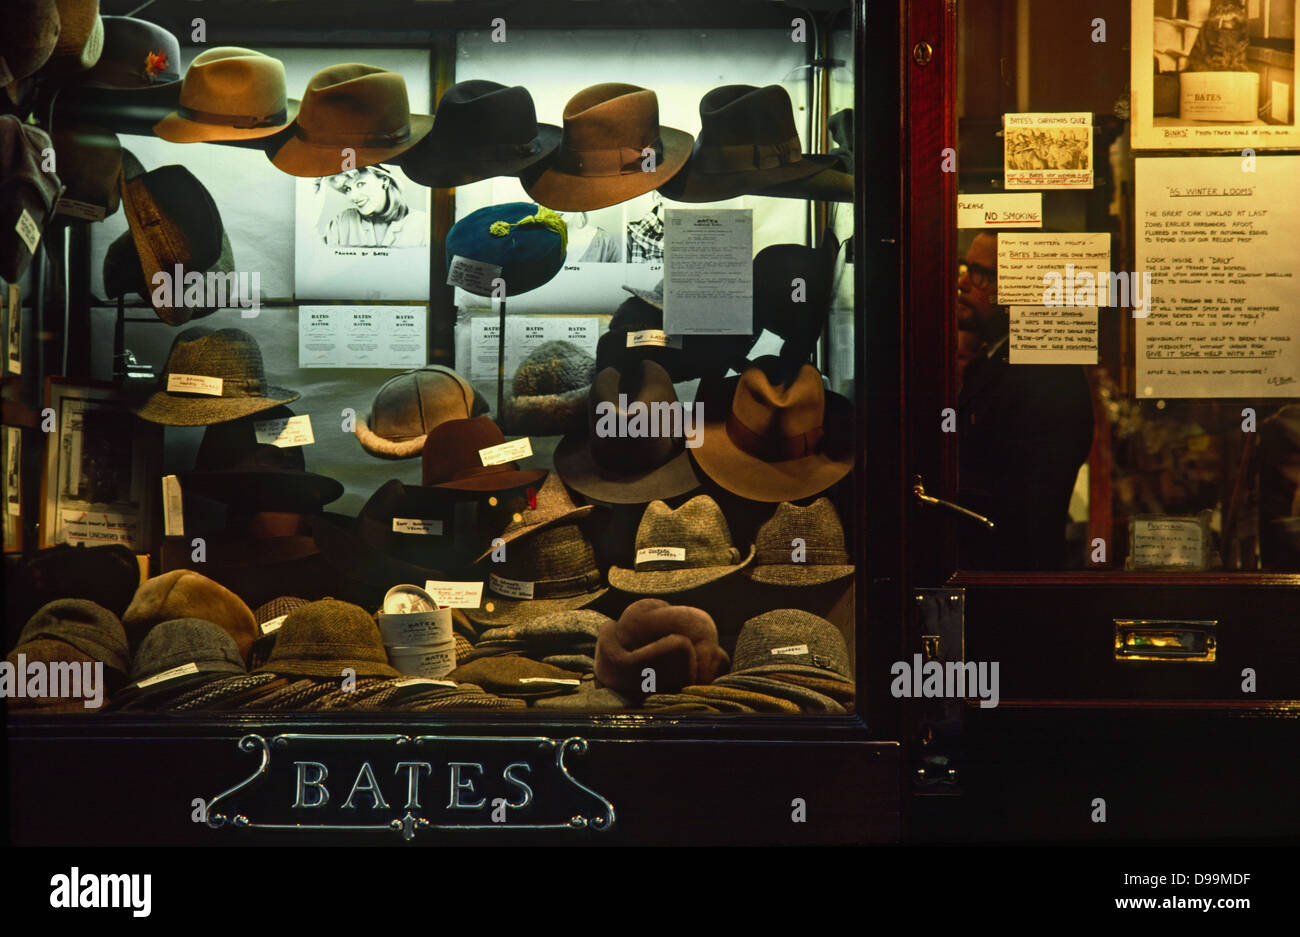 Bates hat shop in Jermyn Street, Mayfair London Stock Photo - Alamy